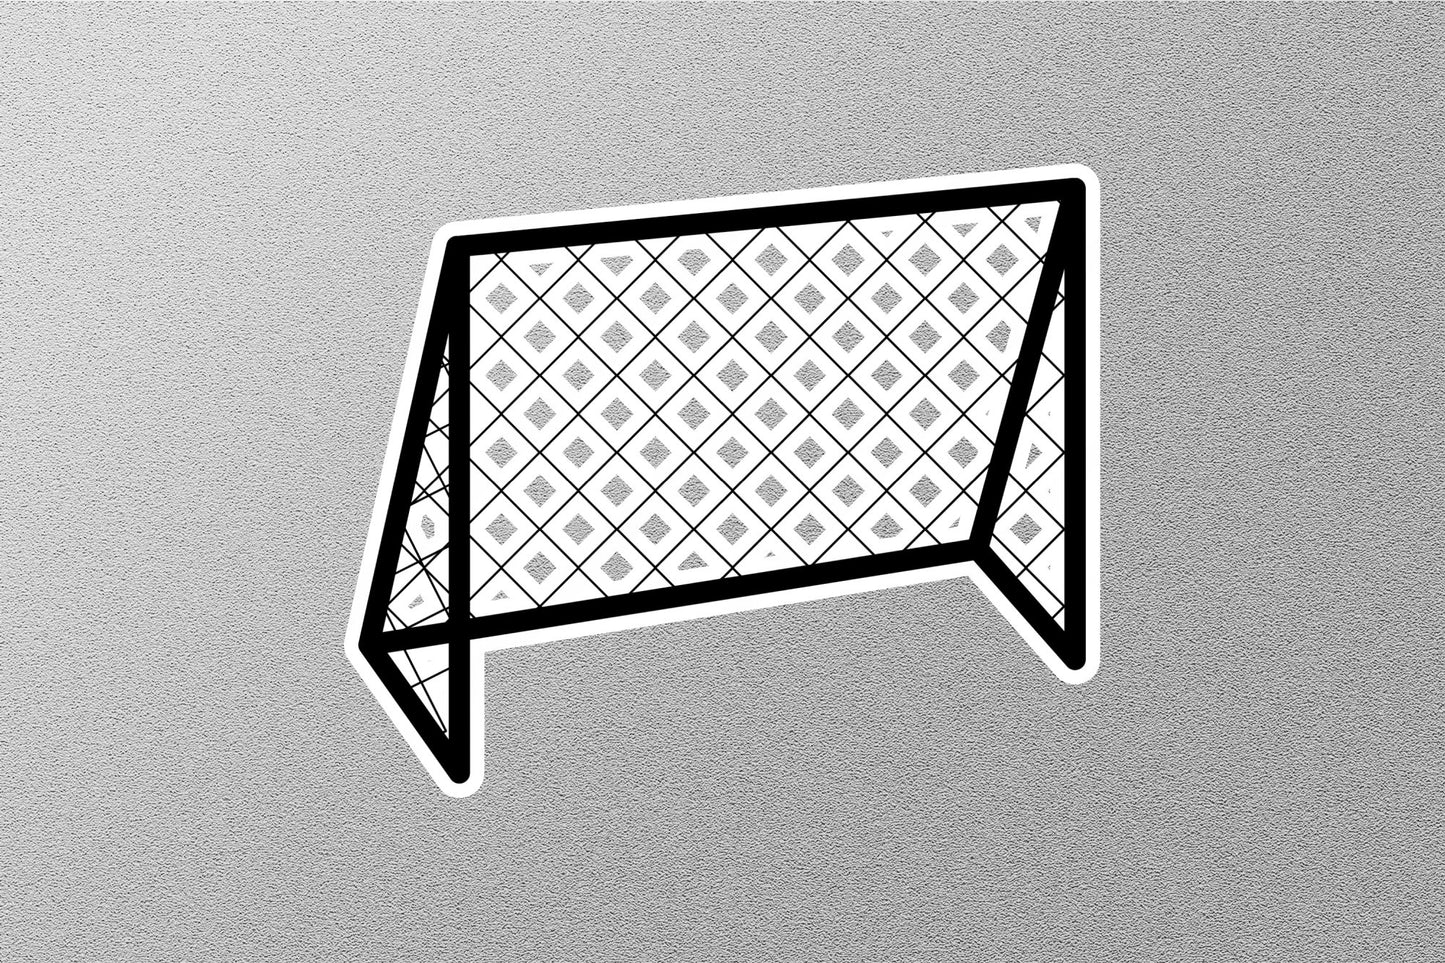 Soccer Net Icon Sticker